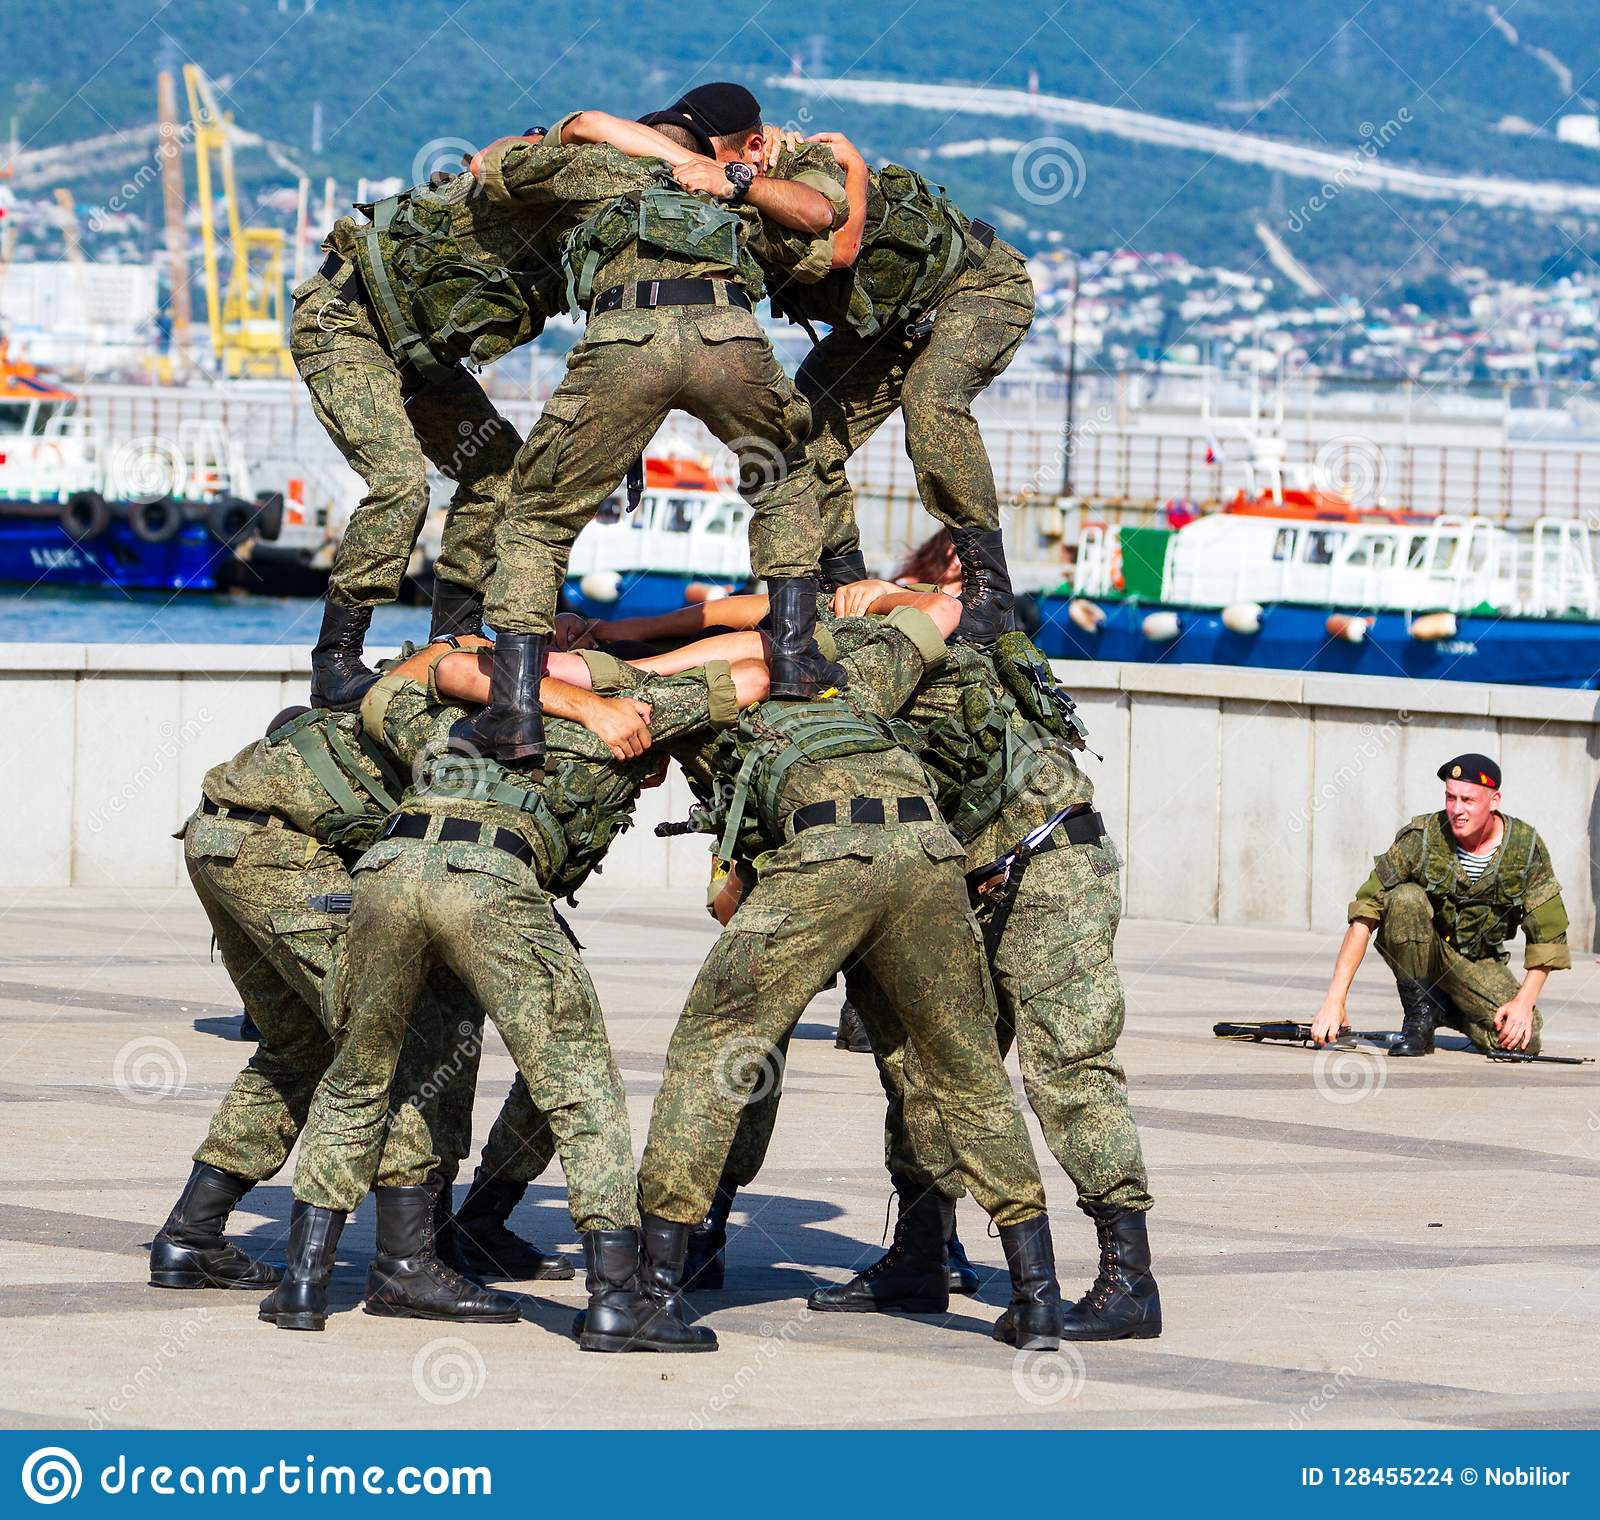 novorossiysk-russia-july-soldiers-making-human-tower-port-128455224.jpg